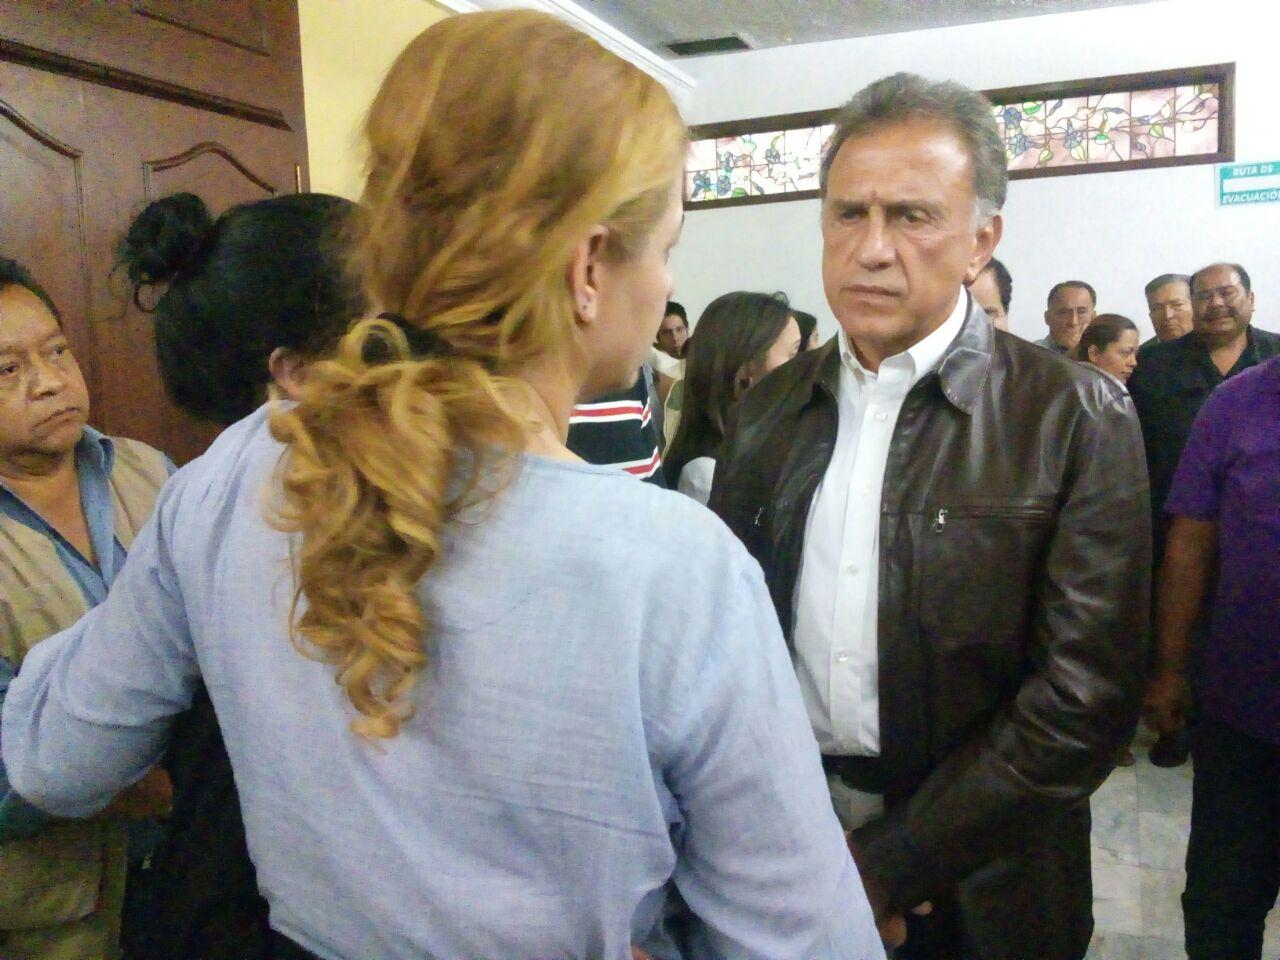  "Saque a mi familia de Veracruz, gobernador”: viuda de periodista